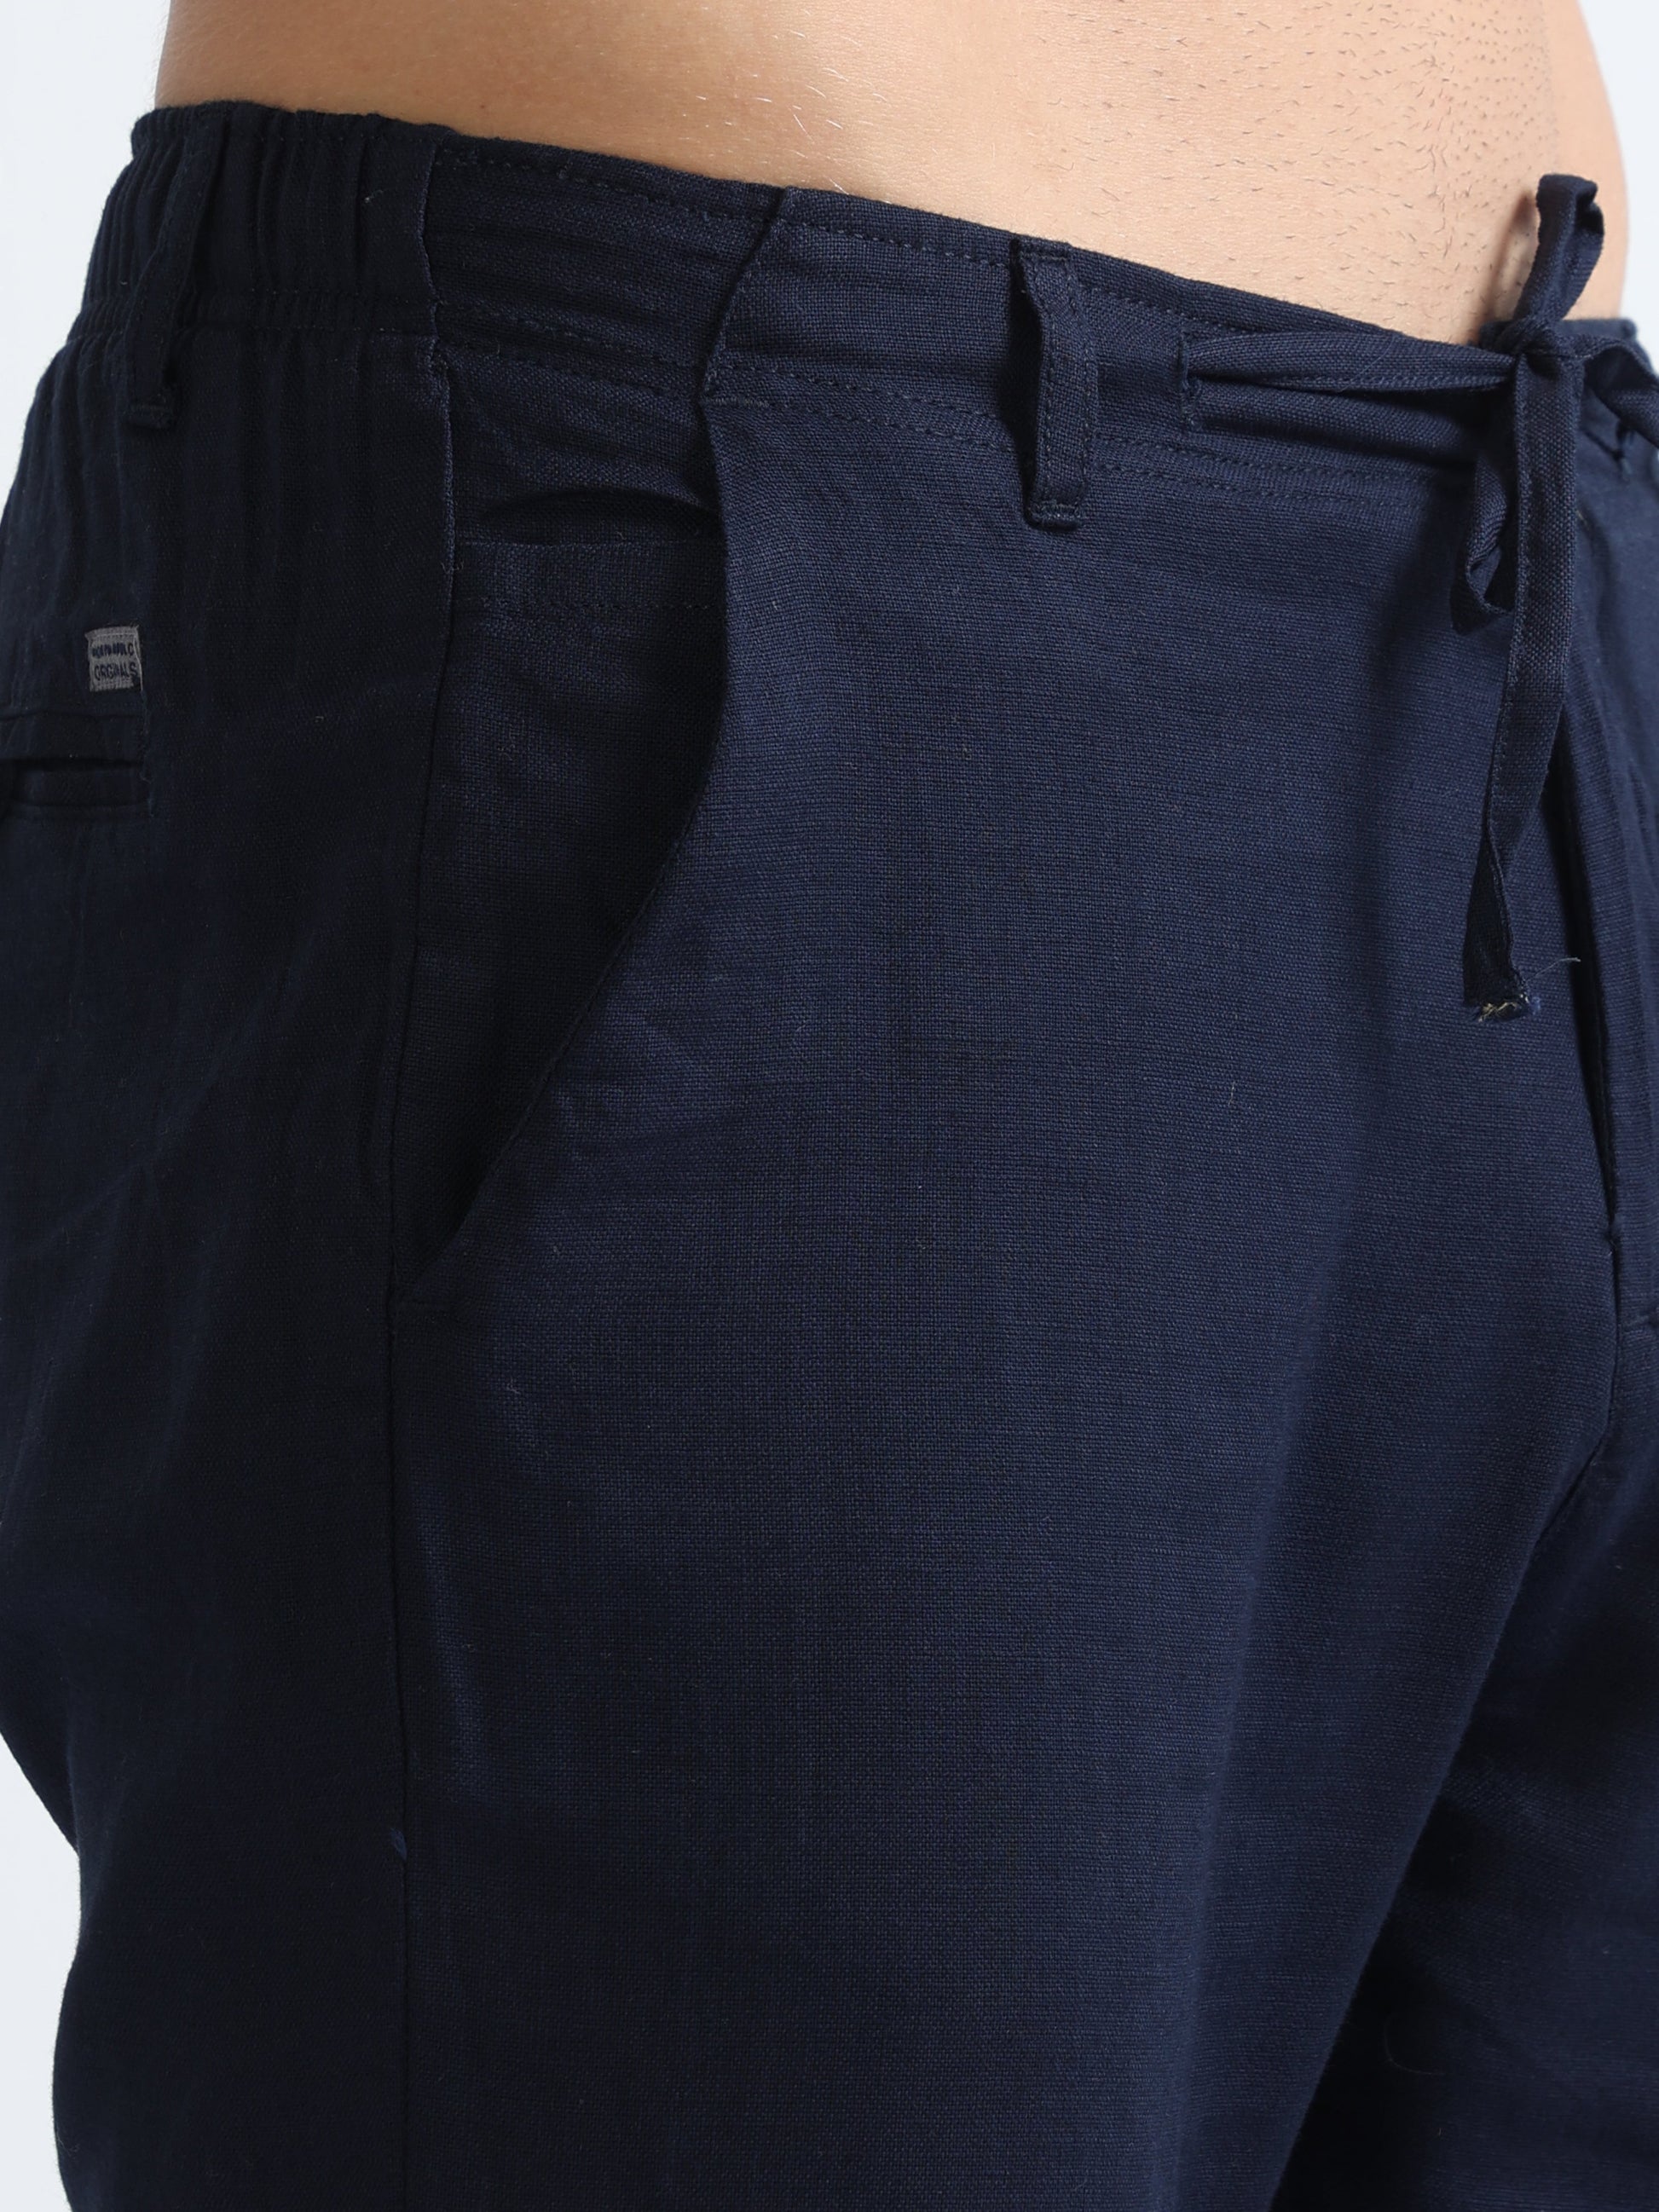 Buy Drawcod Linen Fashion Pant Online.